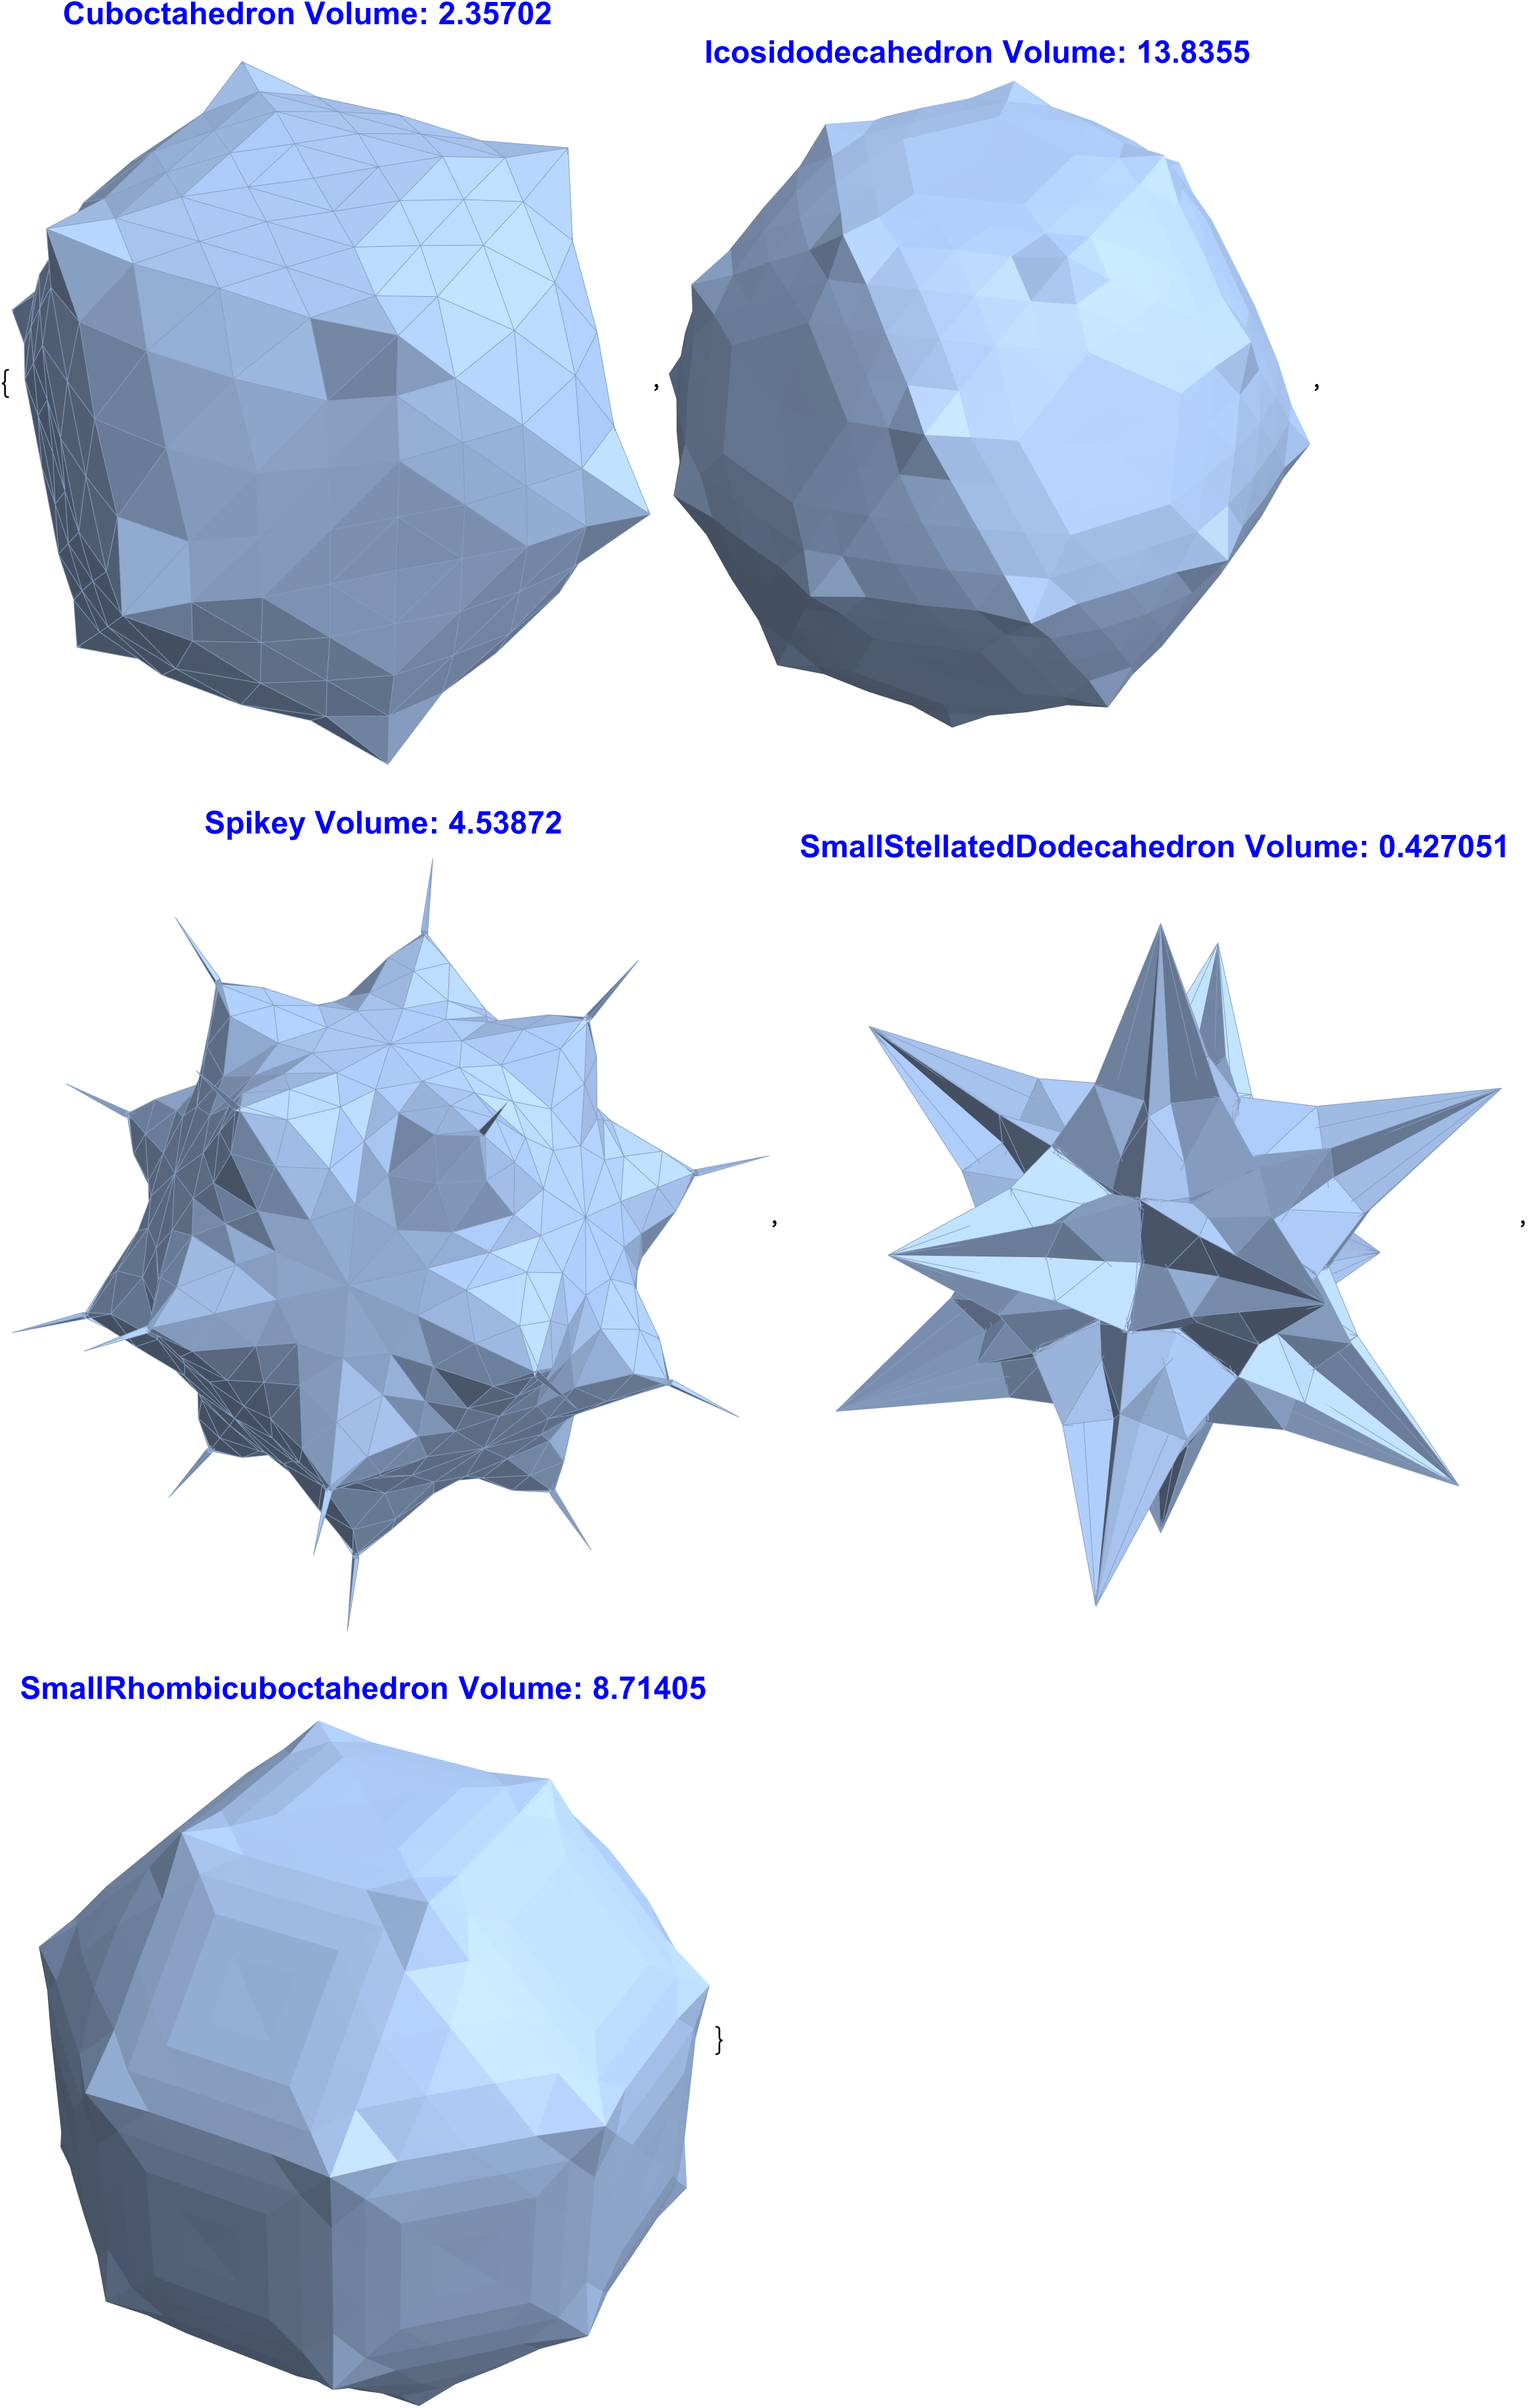 PolyhedraTheSurfaceEvolver